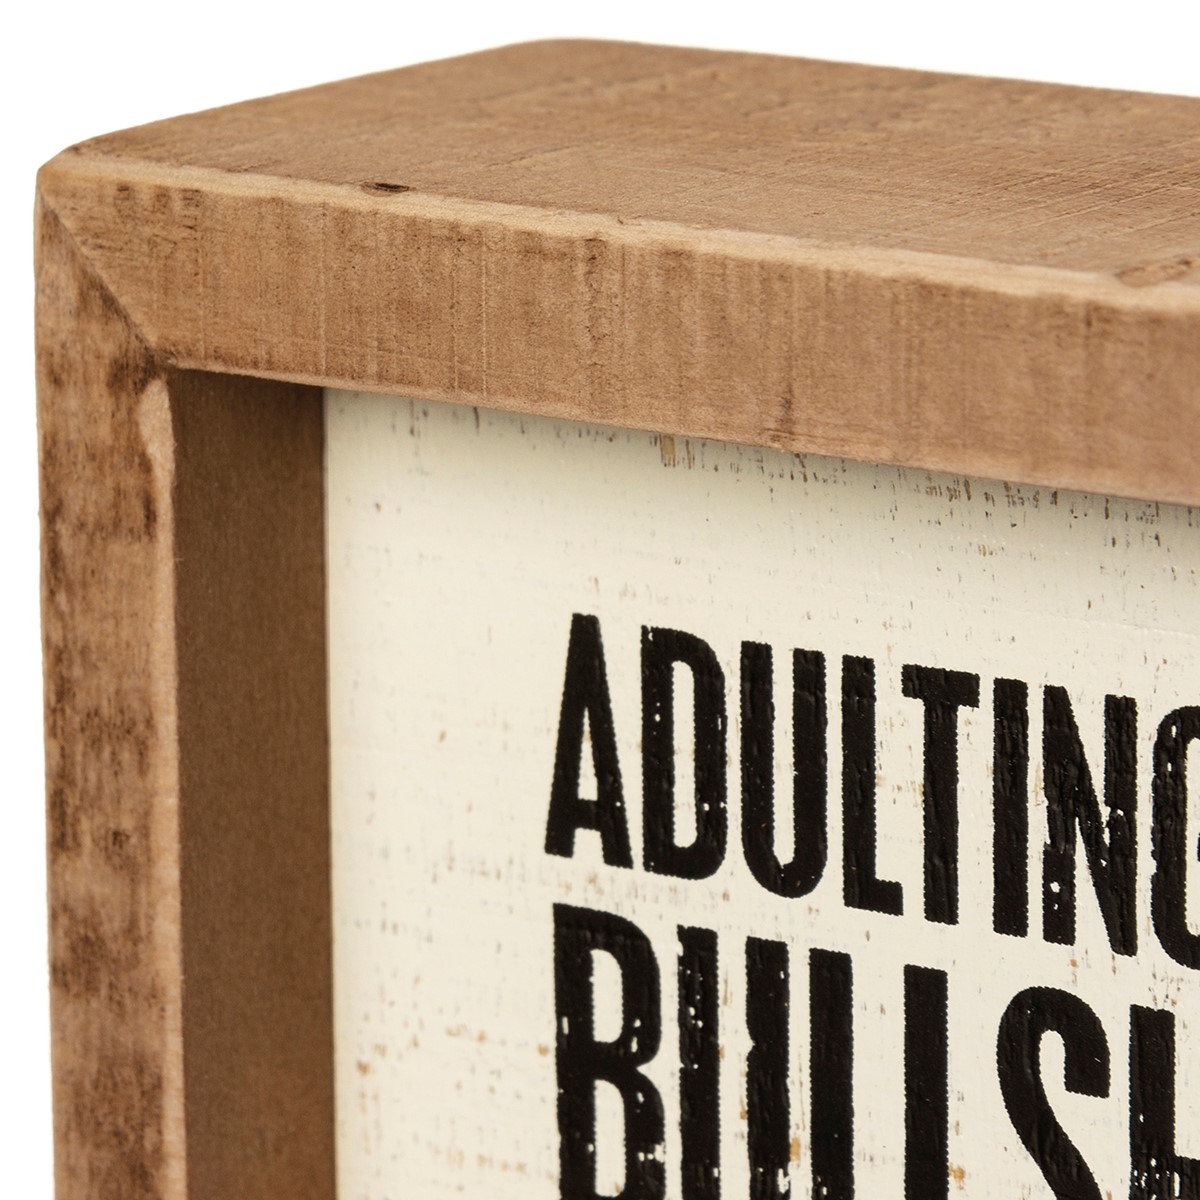 Adulting Is Bullshit Inset Box Sign - Wood